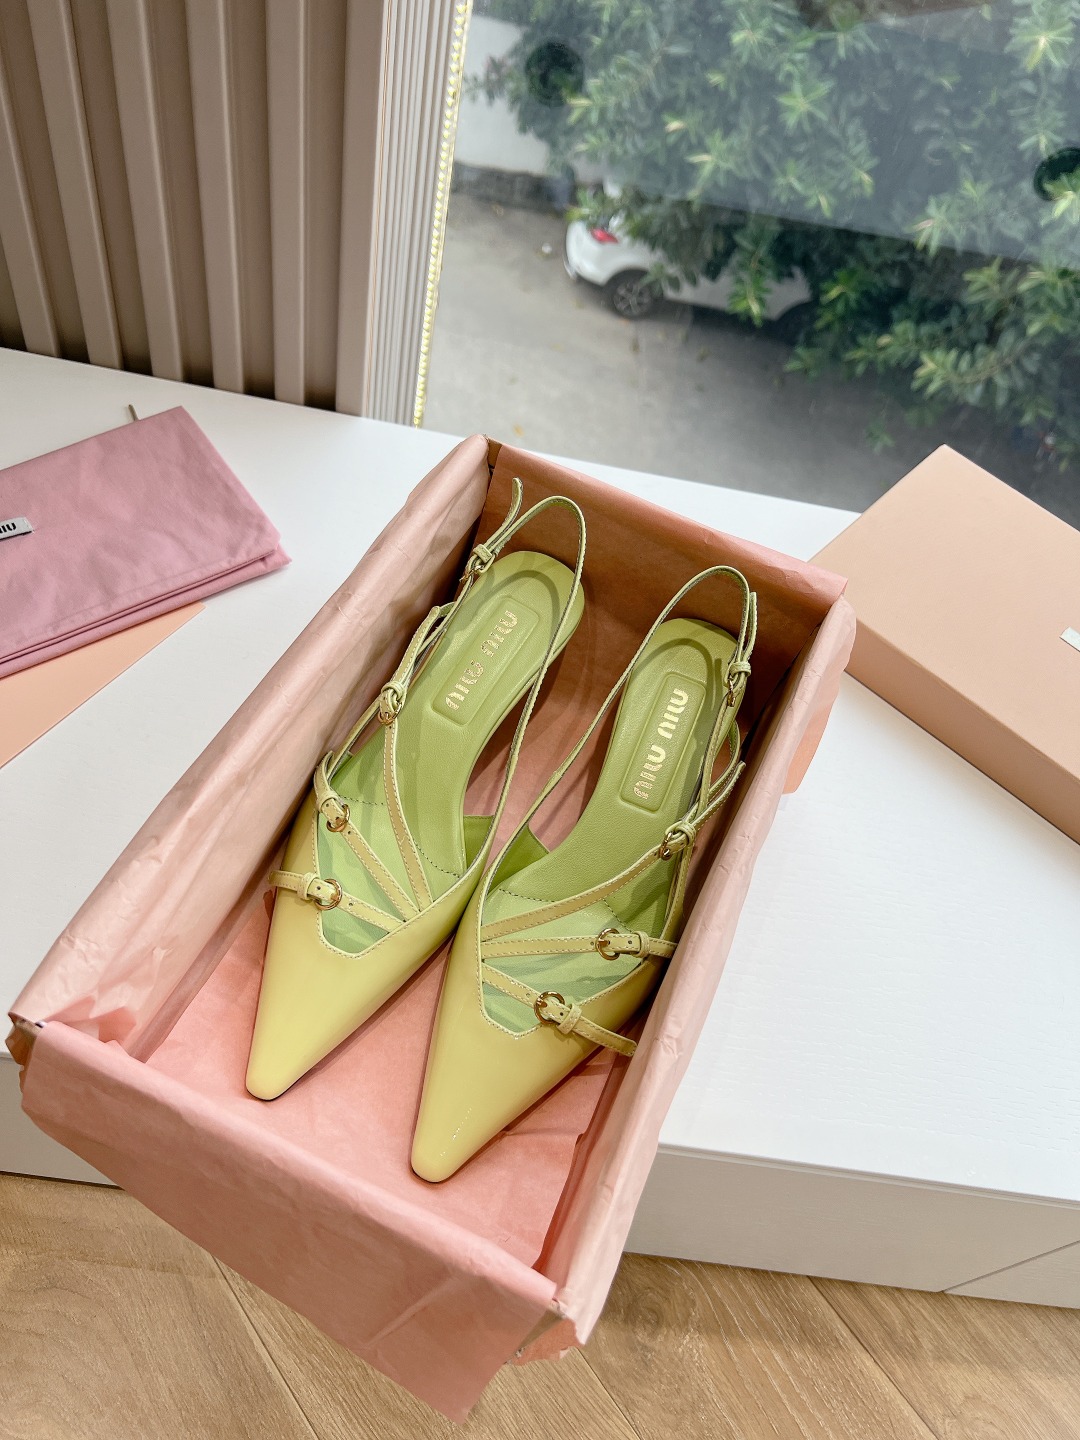 MiuMiu High Heel Pumps Sandals Single Layer Shoes Fashion Designer
 Openwork Patent Leather Sheepskin Spring/Summer Collection